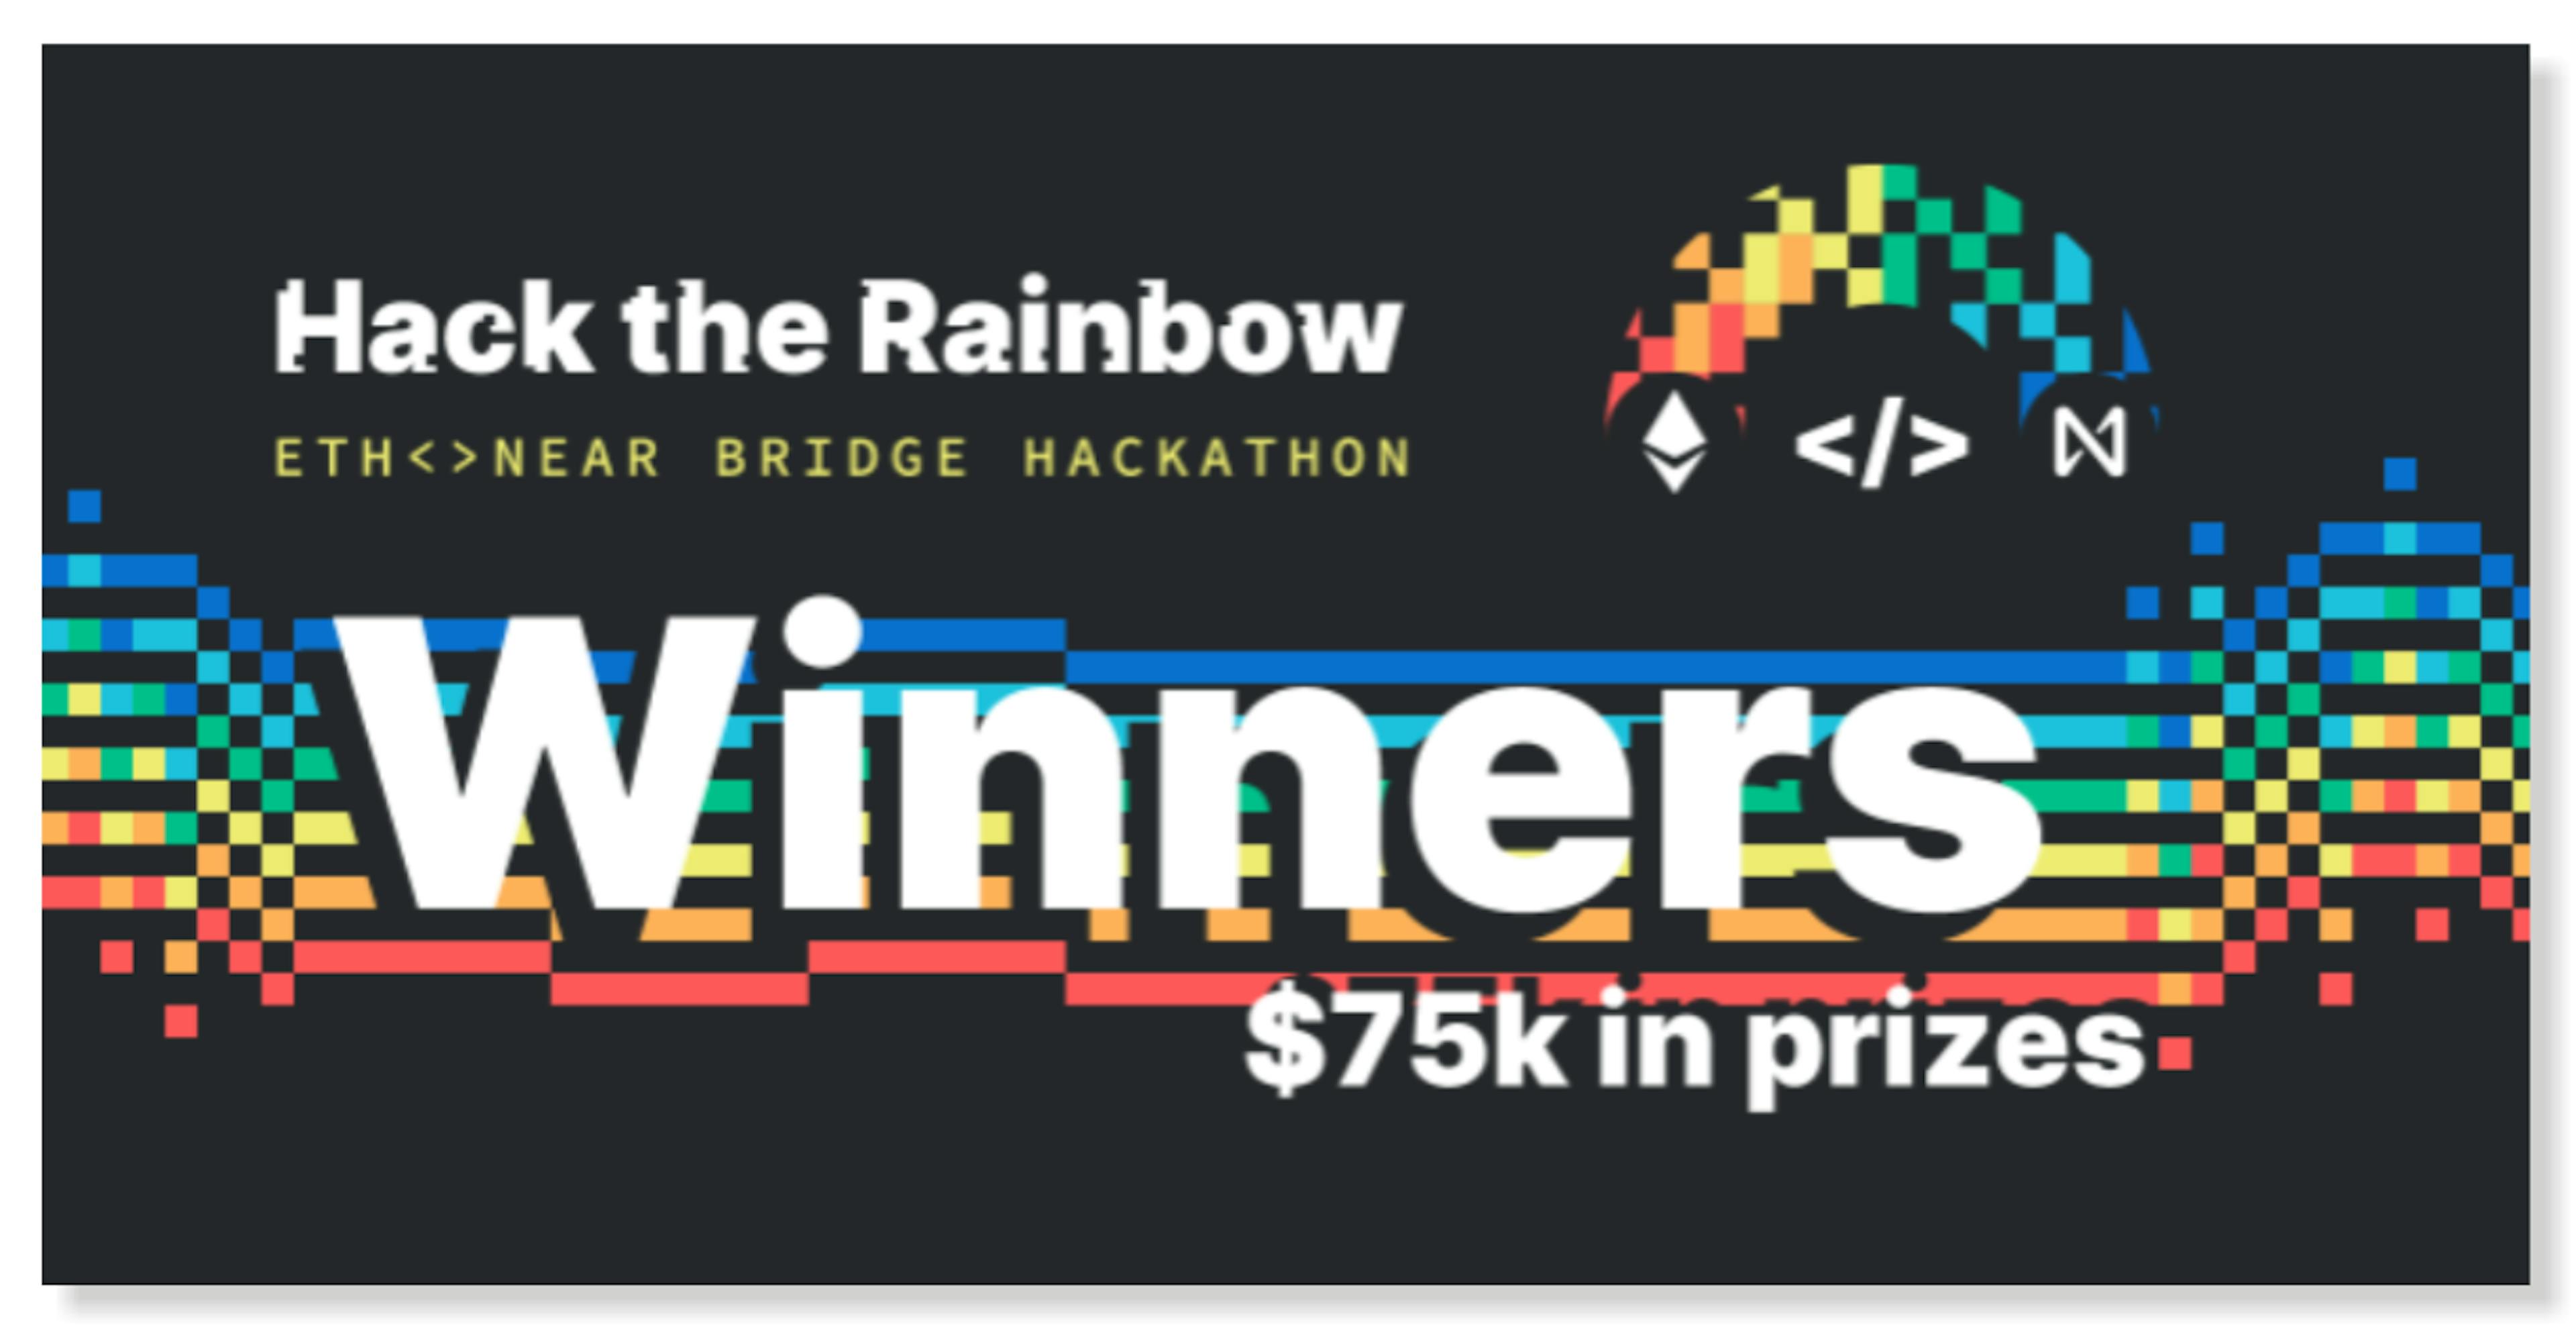 NEAR bridge hackathon